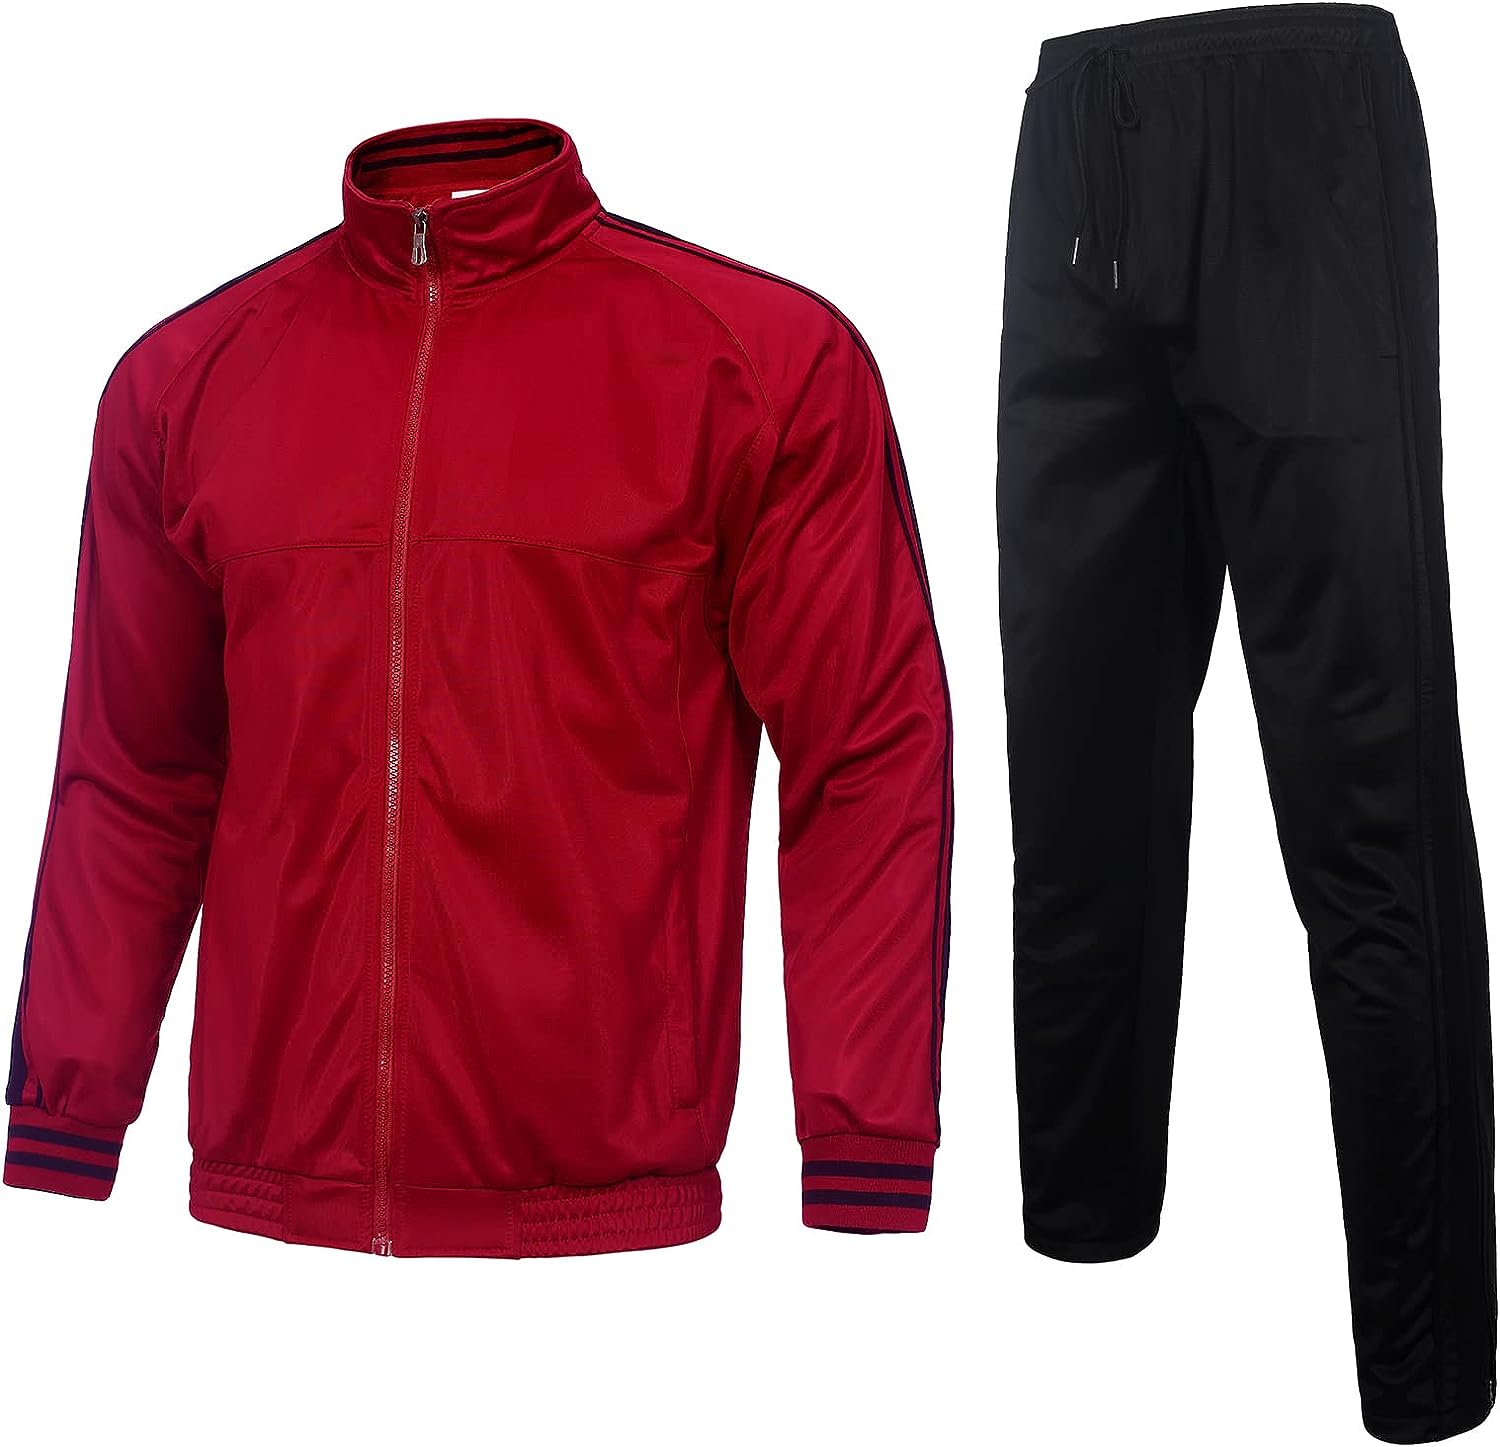 Nothinchan Men's Tracksuits 2 Piece Full Zip Sweatsuits Long Sleeve Jogging  Suit